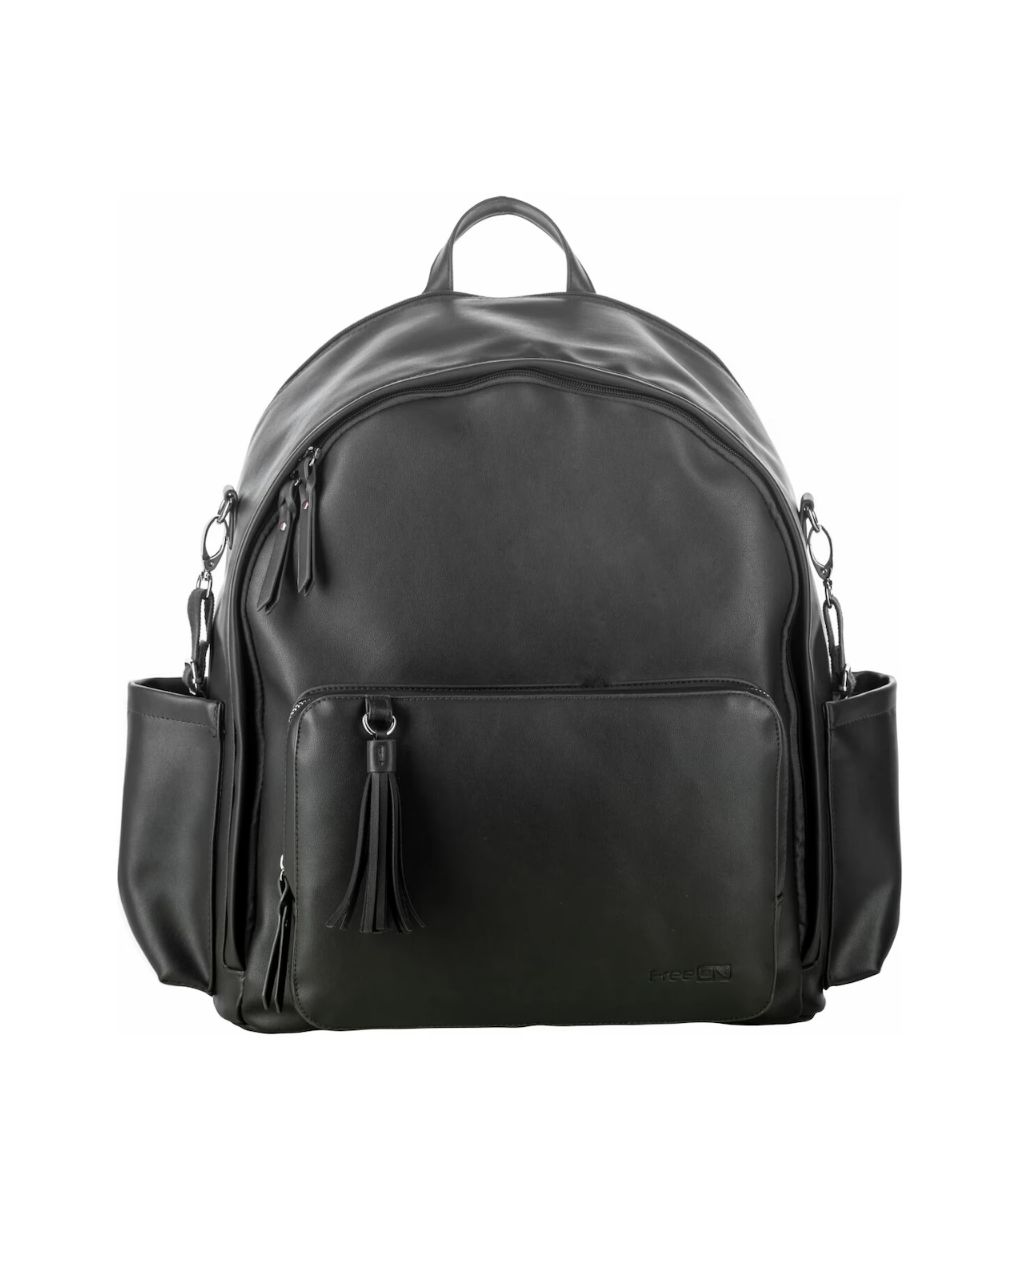 Freeon τσάντα πλάτης – αλλαξιέρα backpack glamour